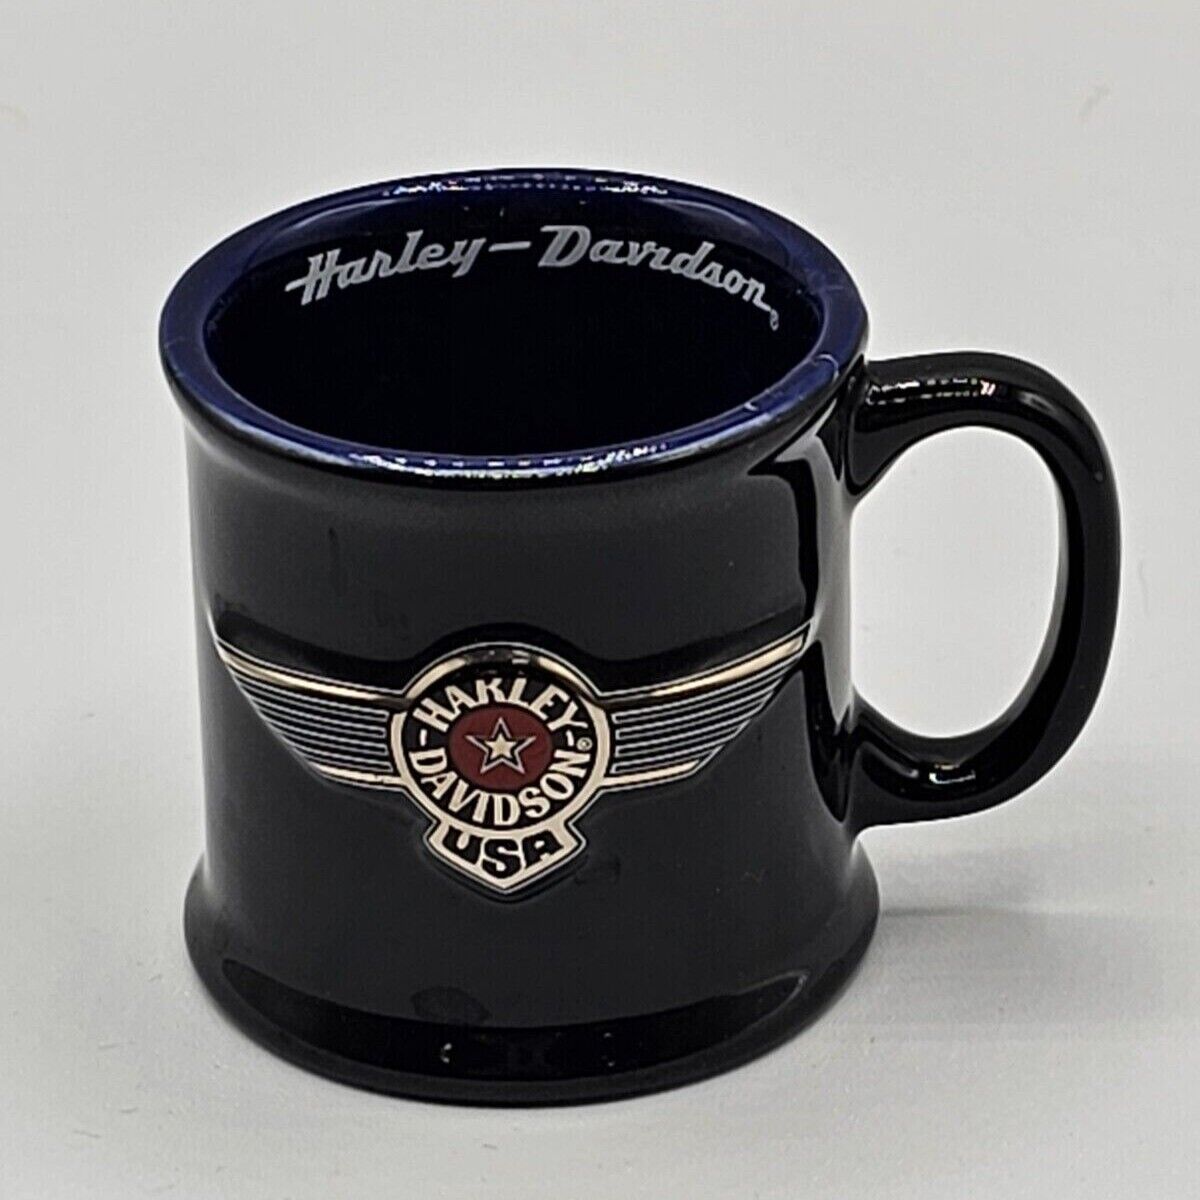 Harley Davidson Motorcycles Mini Mug Shot Glass Great for Bar or Game Room